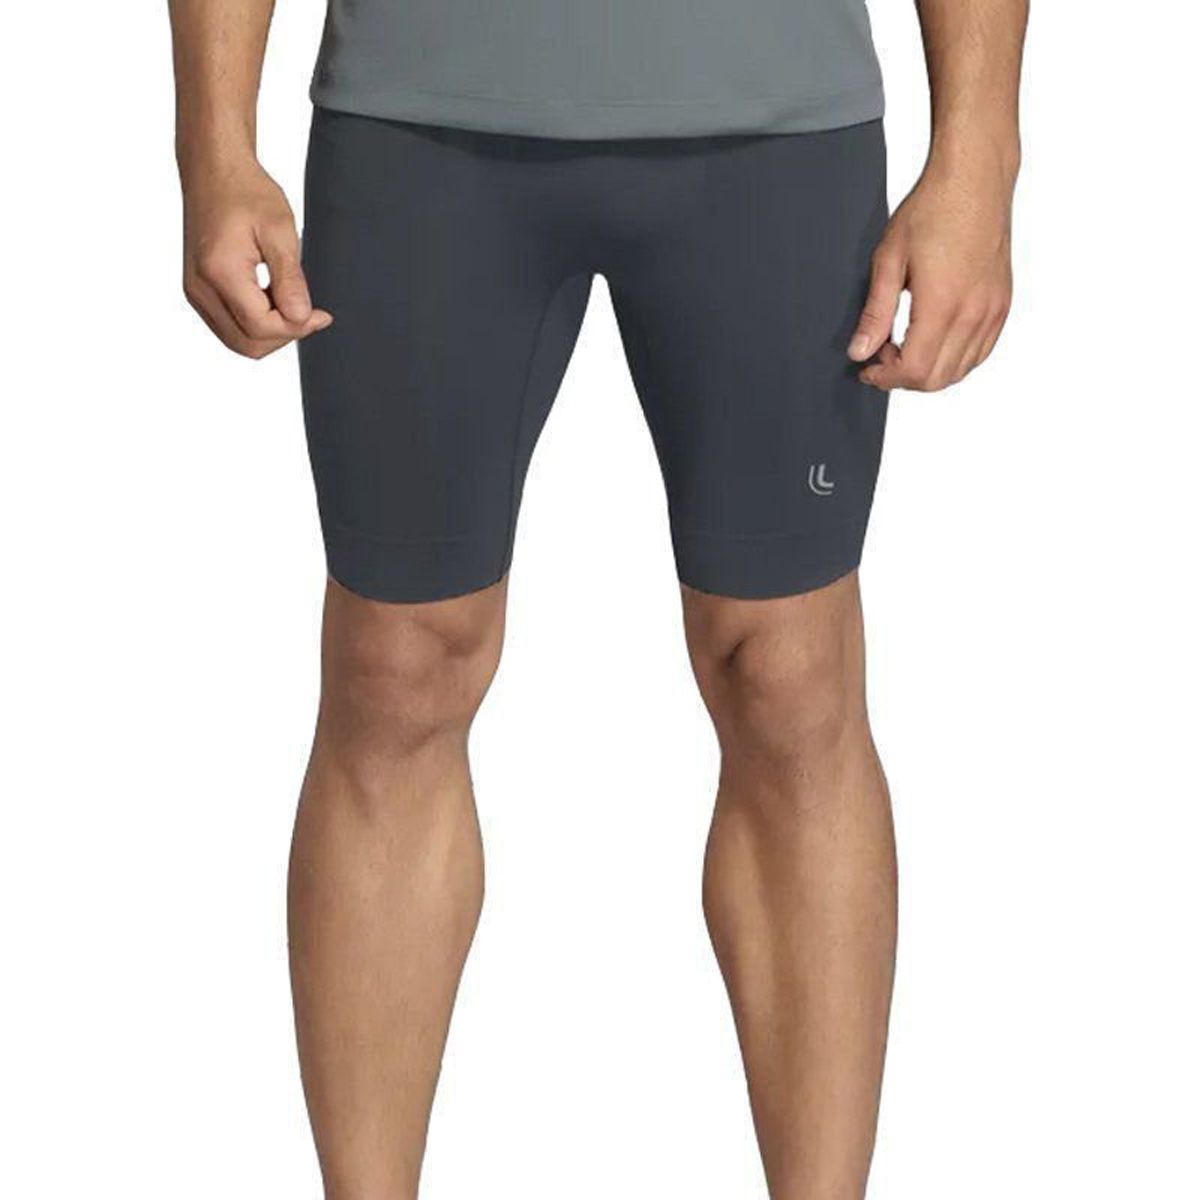 Shorts Masculino Lupo com Alta Compressão Bermuda Térmica imax